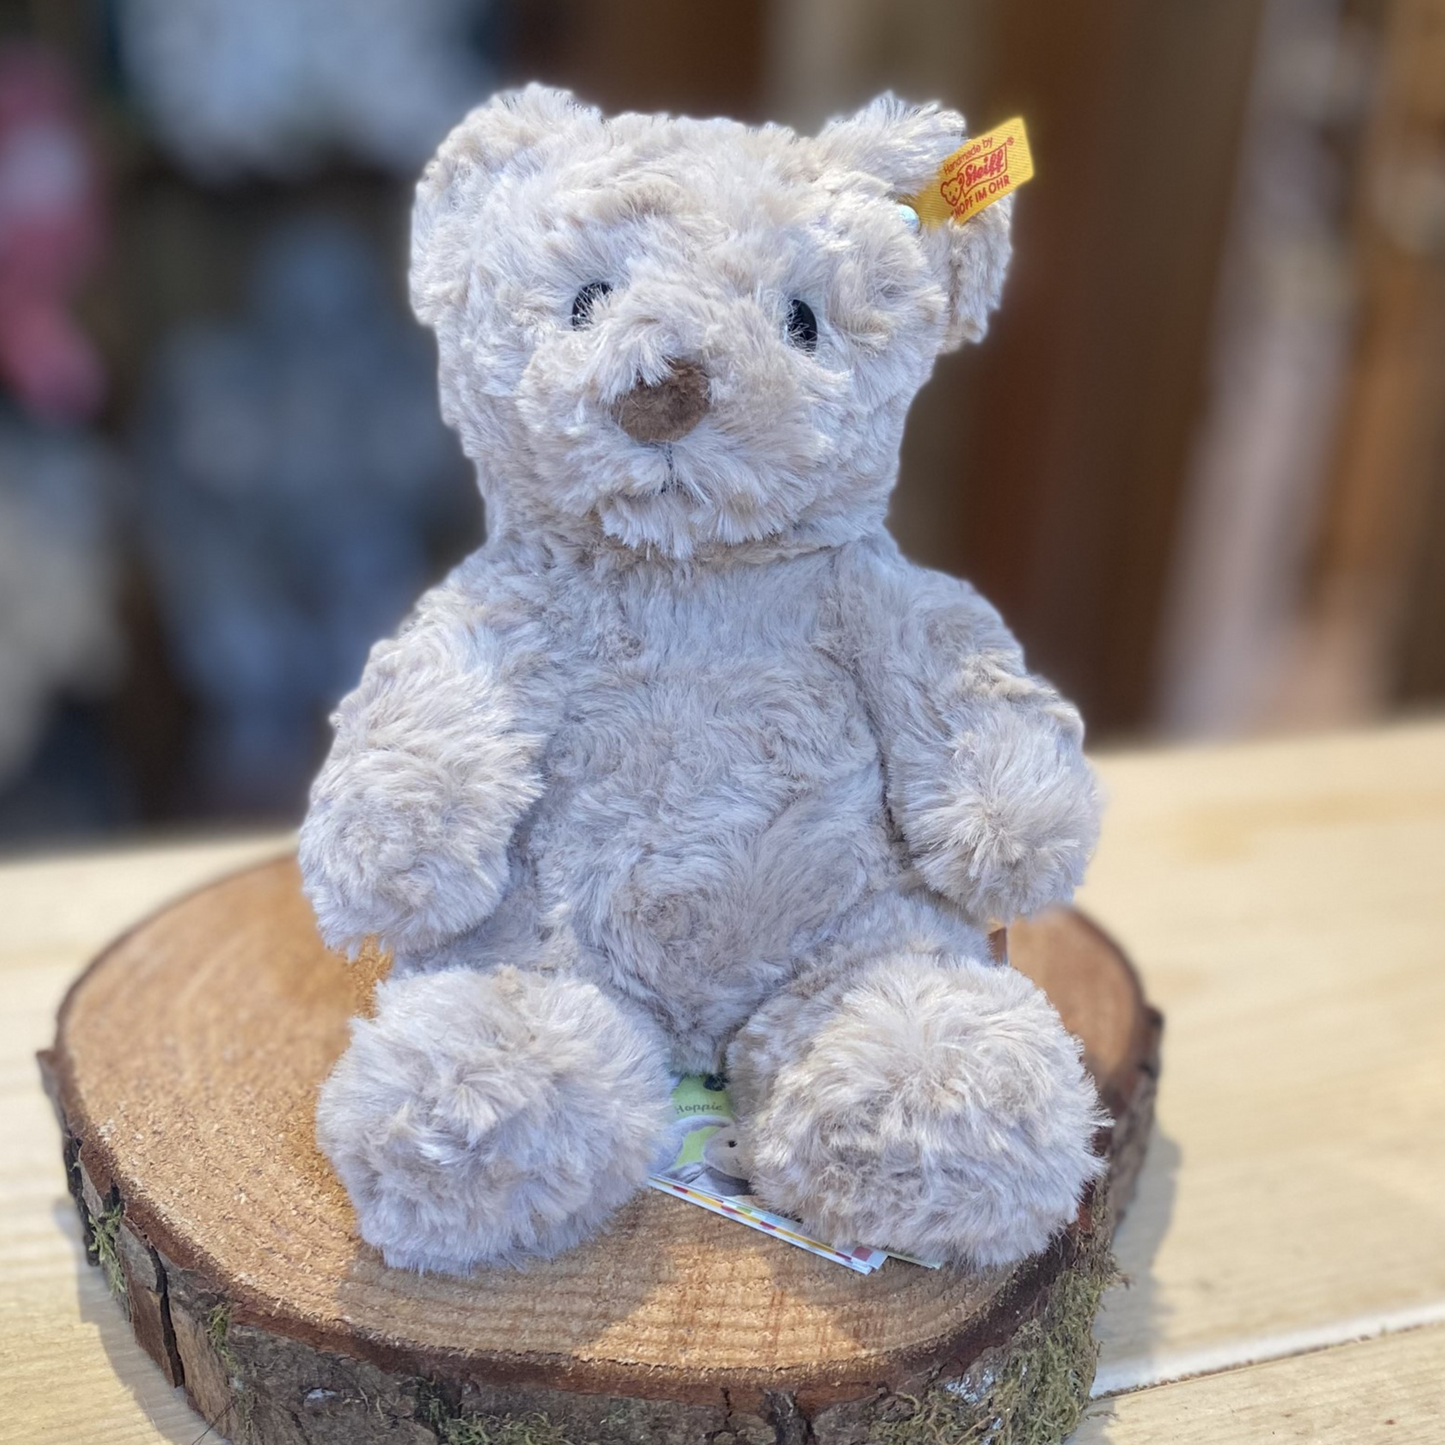 Steiff Honey Teddy Bear - 18cm